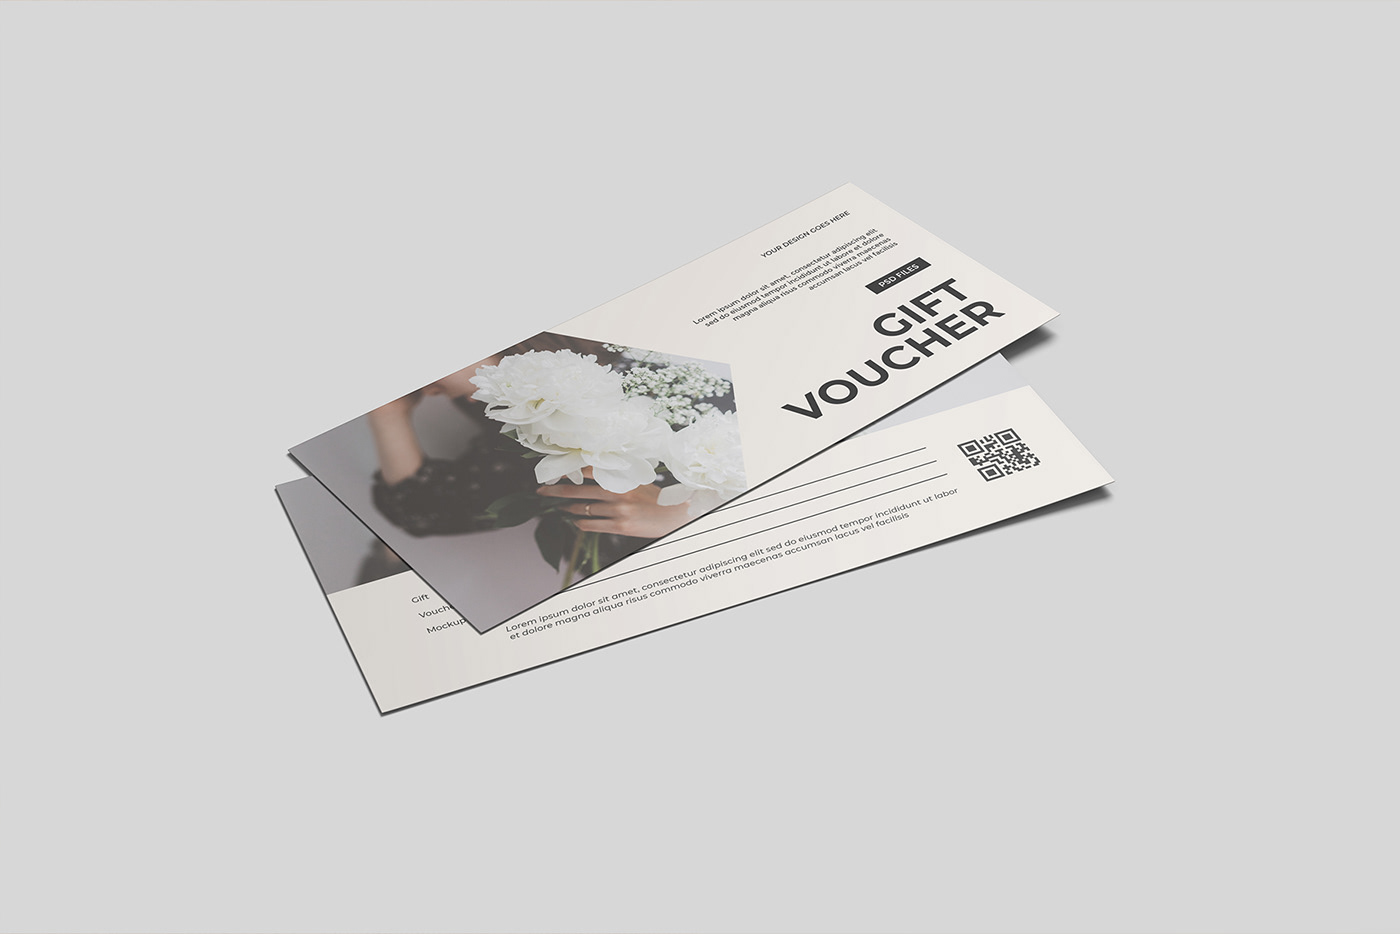 voucher gift COUPON Mockup Brand Design Graphic Designer sale discount business card